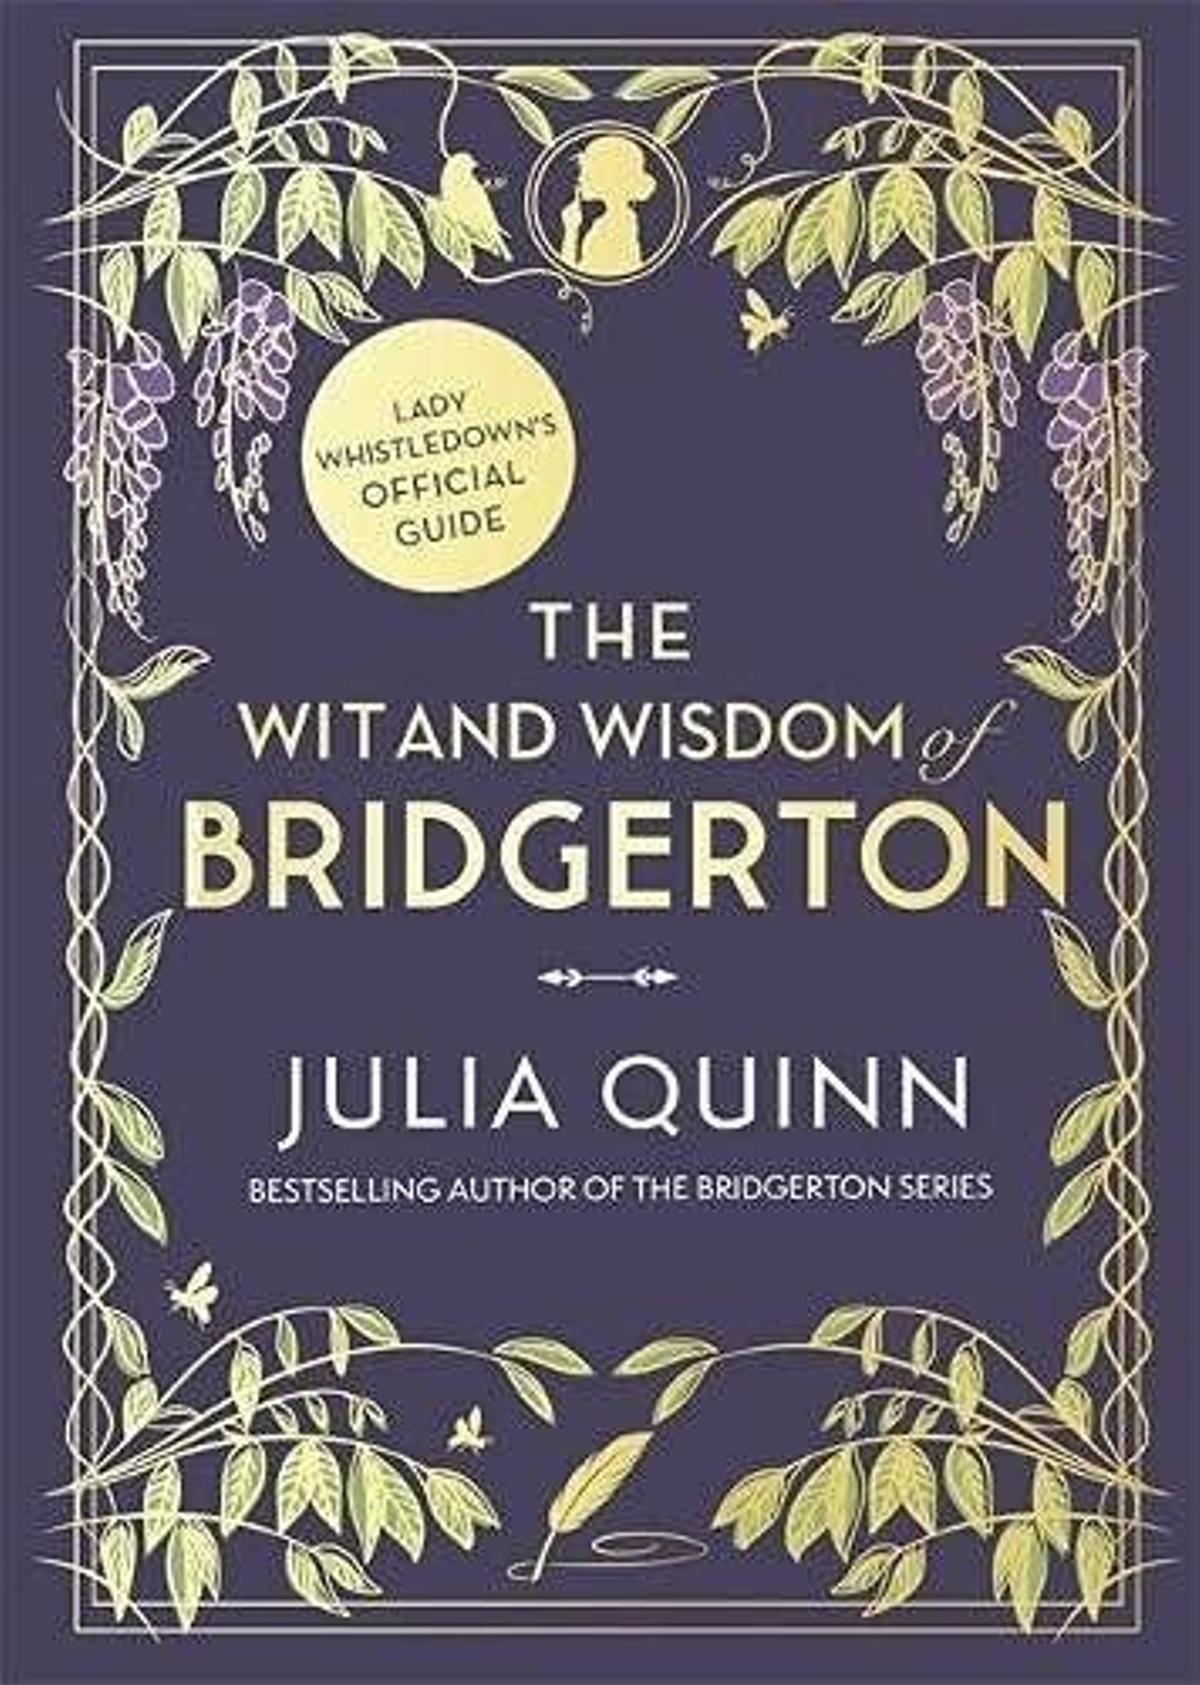 The wit an wisdom of Bridgerton (el libro en inglés de Lady Whistledown)